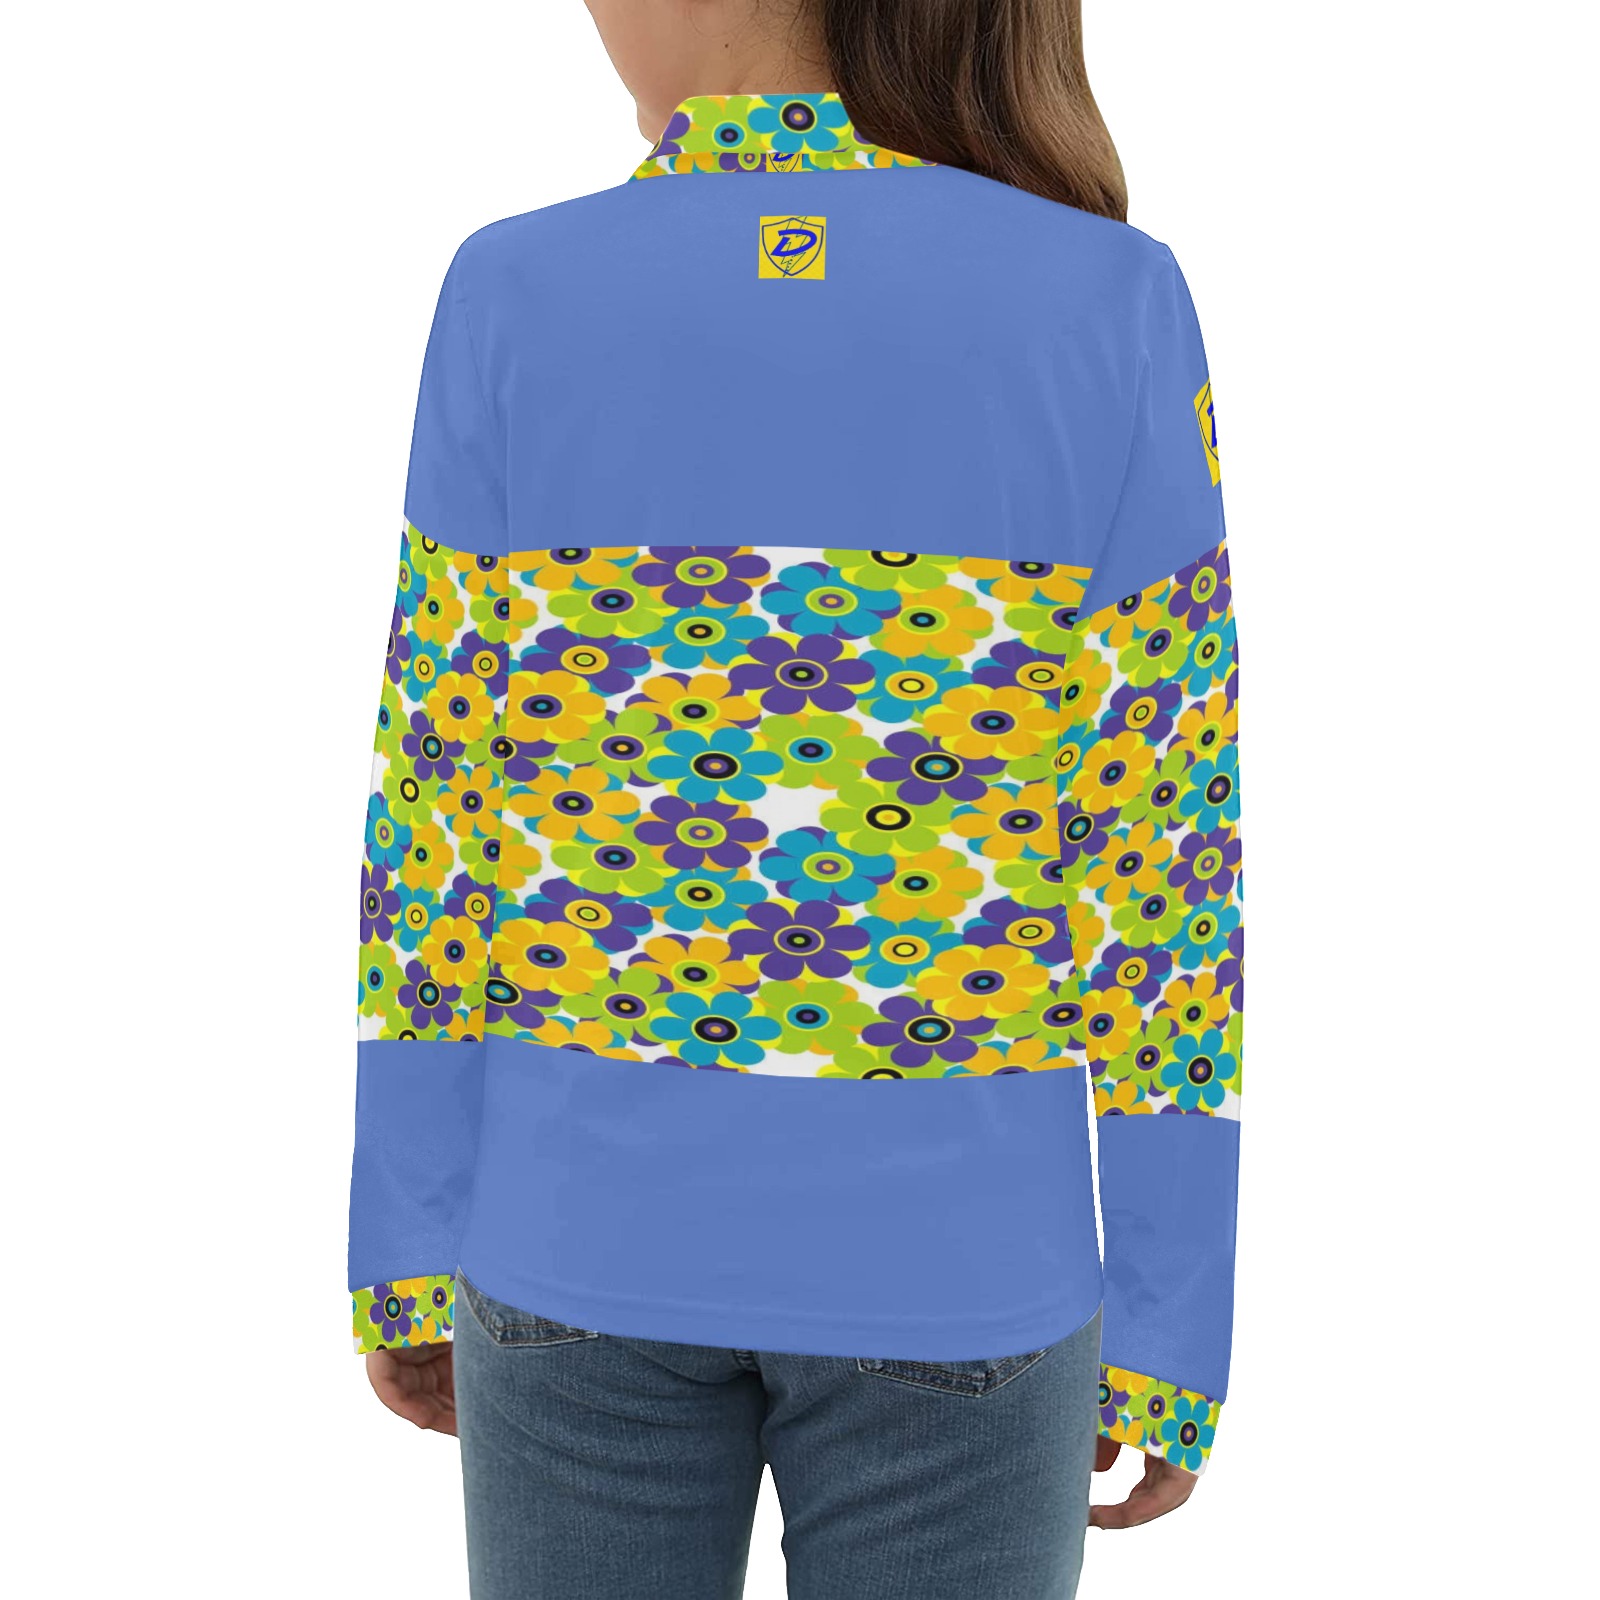 DIONIO Clothing - Ladies Long Sleeve Polo Shirt (Blue Flowers Blue & Yellow Logo) Big Girls' All Over Print Long Sleeve Polo Shirt (Model T73)